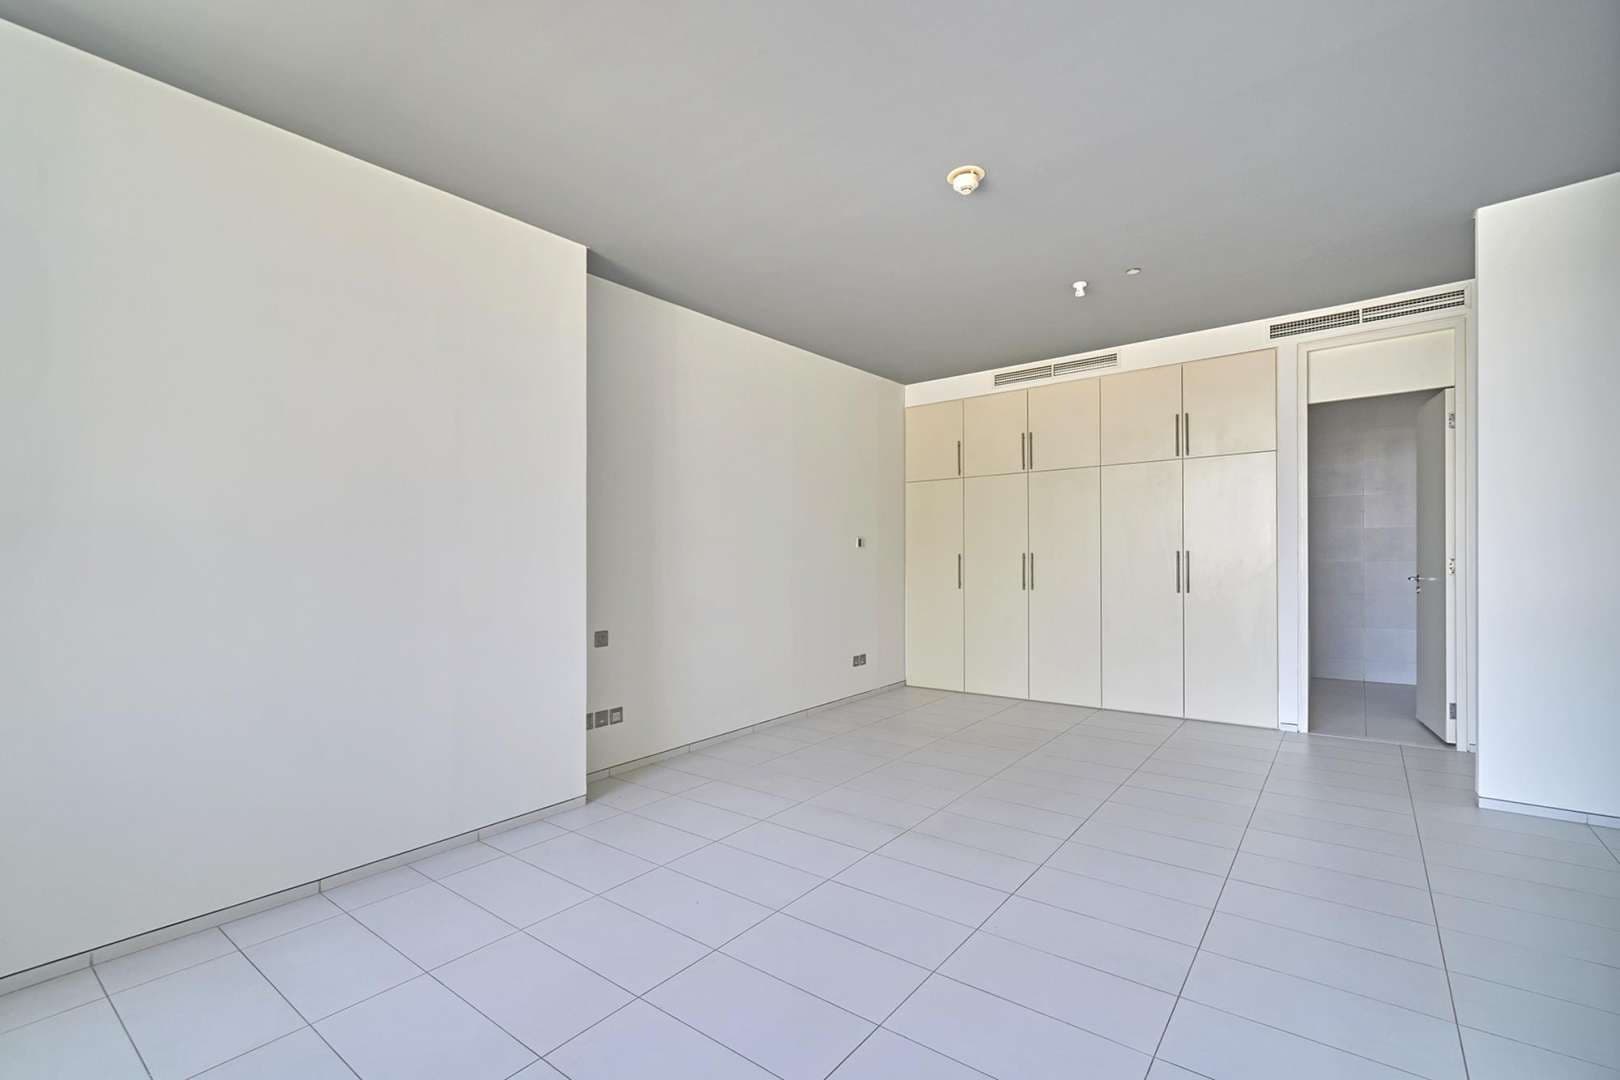 1 Bedroom Apartment For Rent Index Tower Lp05988 28bb7d51697ef80.jpg